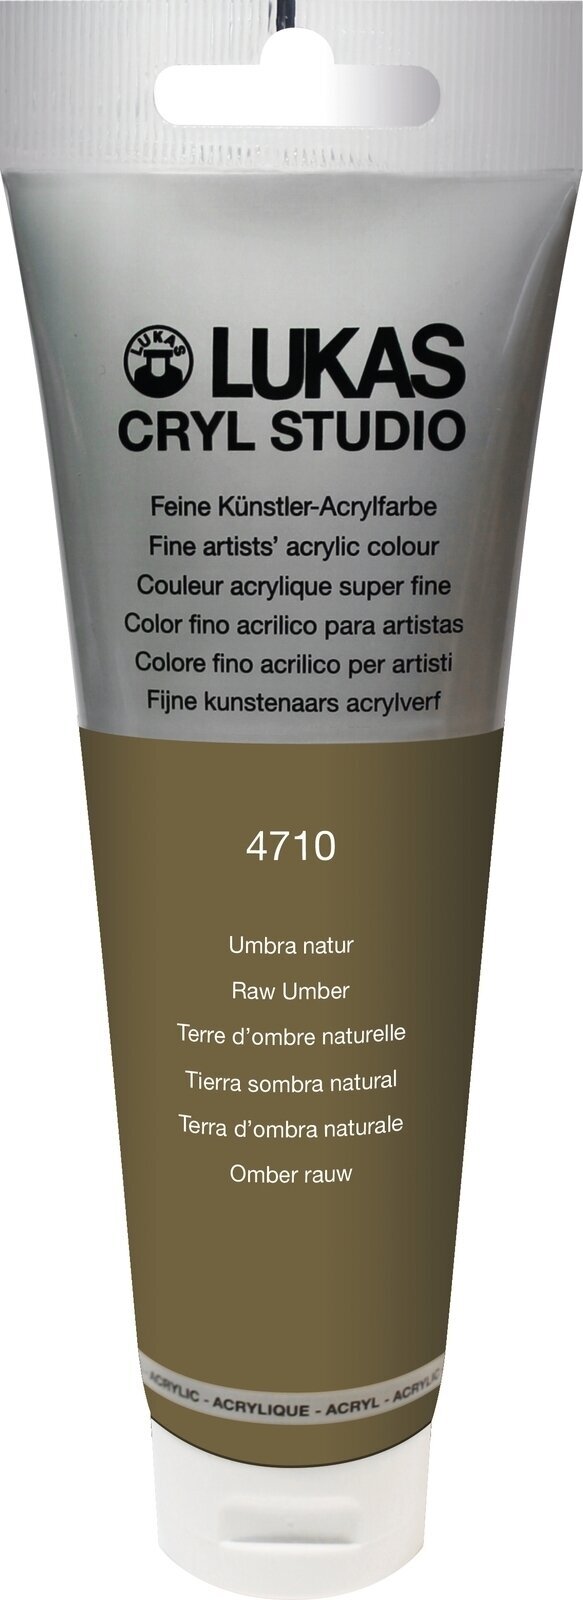 Akrylová farba Lukas Cryl Studio Acrylic Paint Plastic Tube Akrylová farba Raw Umber 125 ml 1 ks